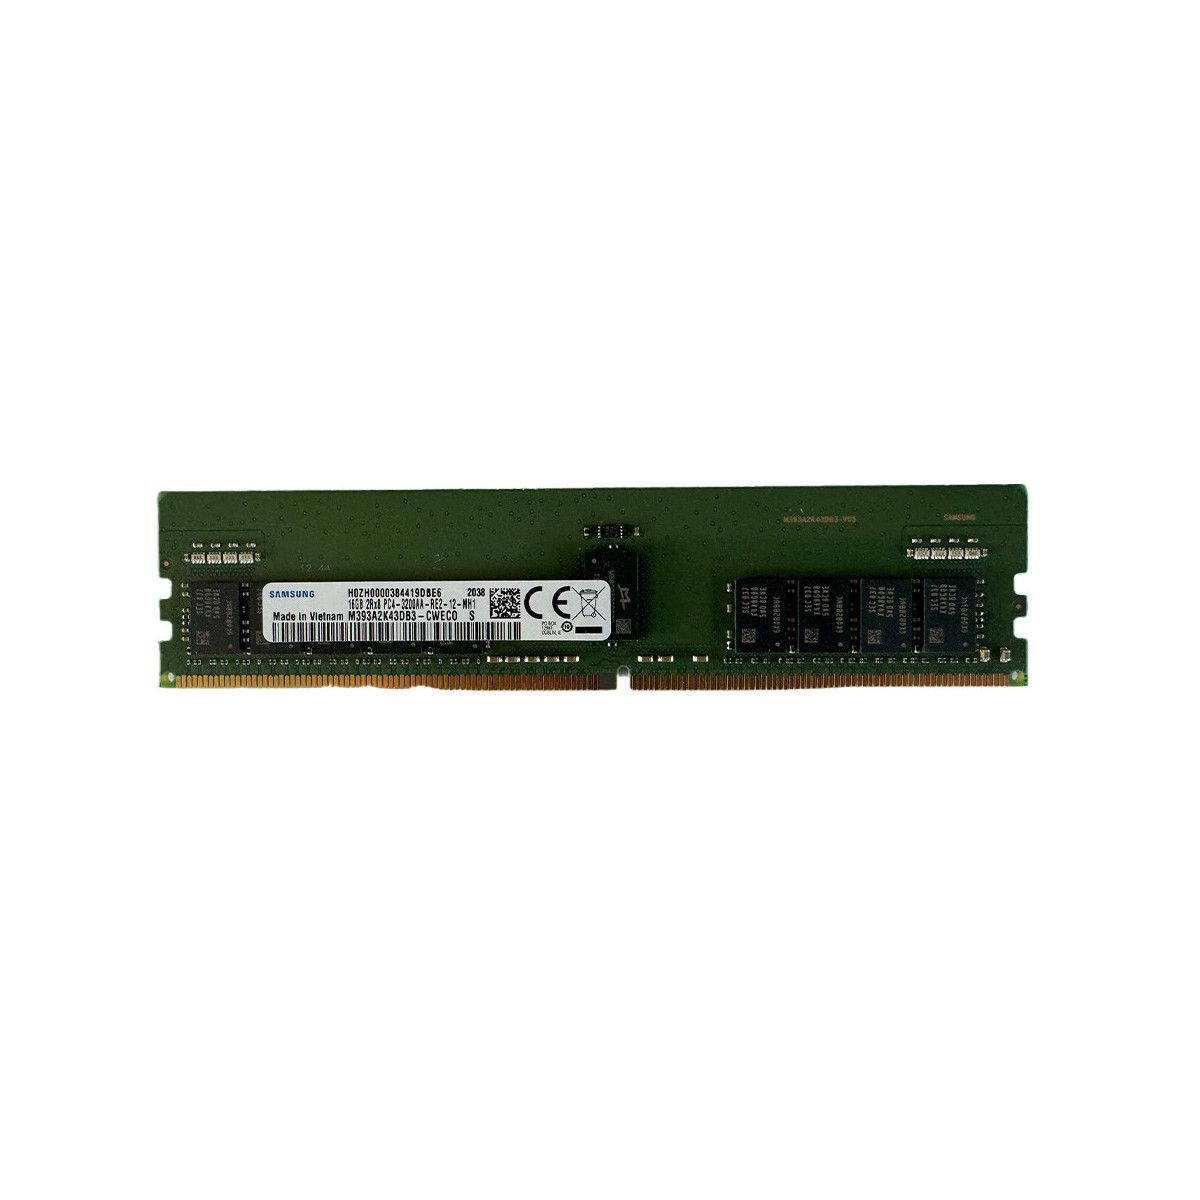 AB214251-MS - Memstar 1x 16GB DDR4-3200 RDIMM PC4-25600R - Mem-Star Kompatibel OEM Speichermedien 1 - Memstar 